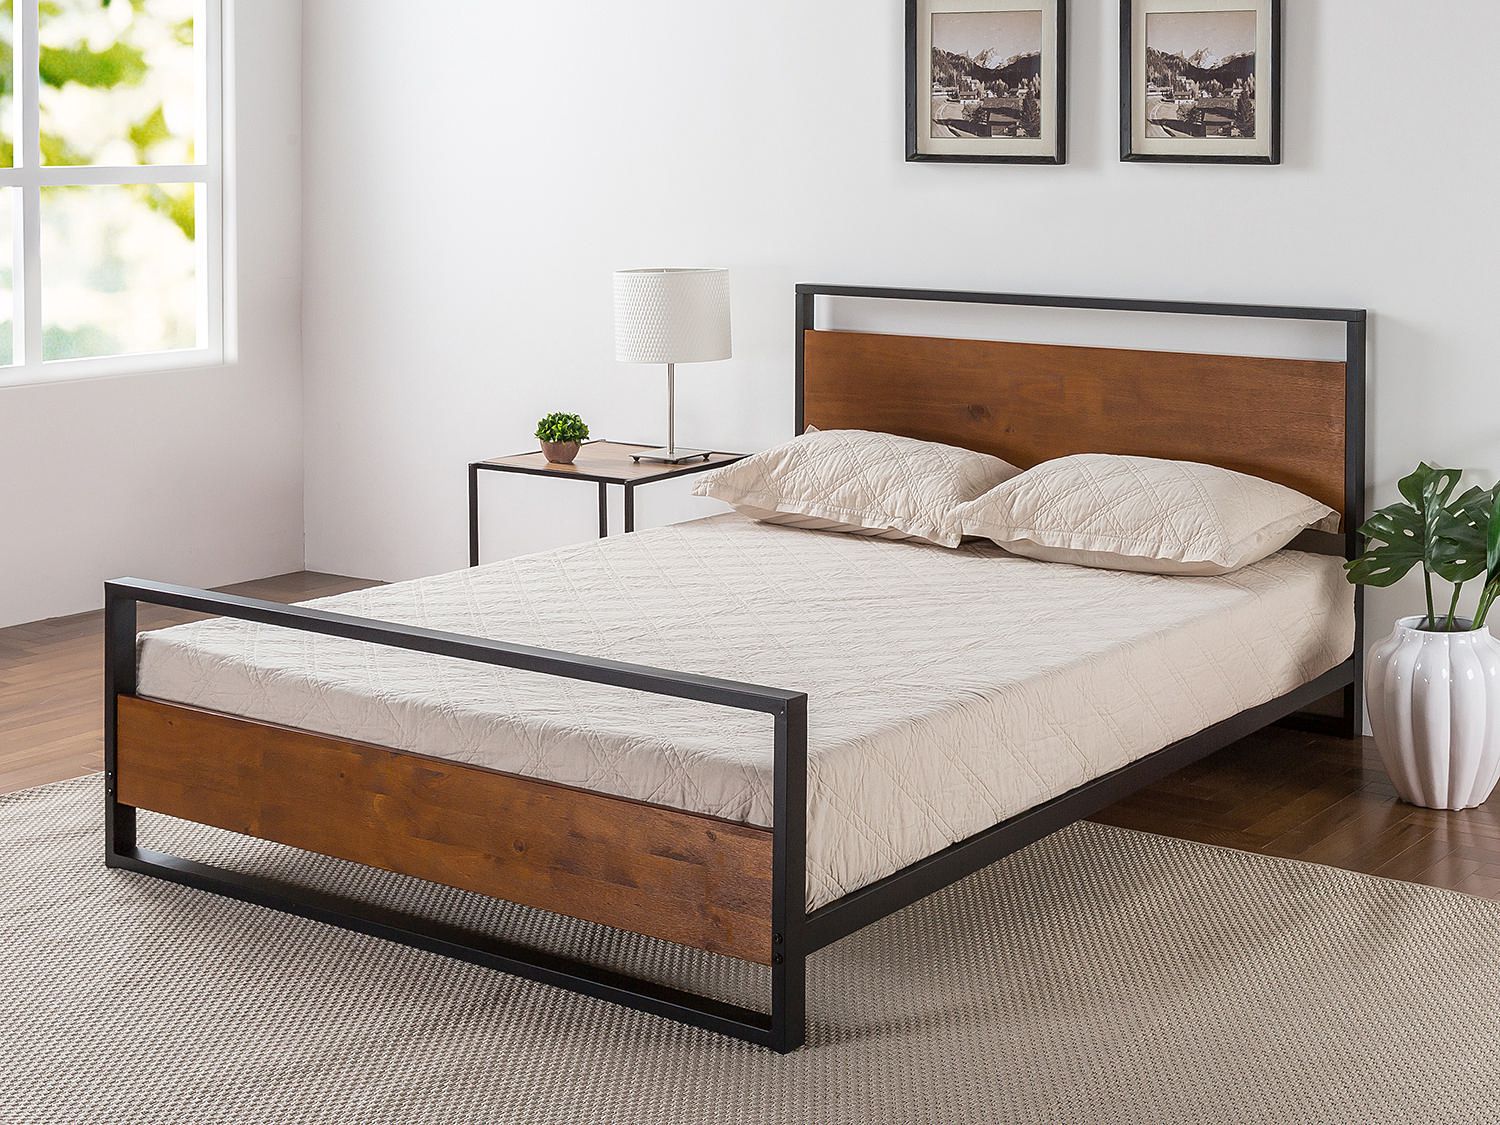 Zinus Ir Metal And Wood Platform, Zinus King Bed Frame With Headboard